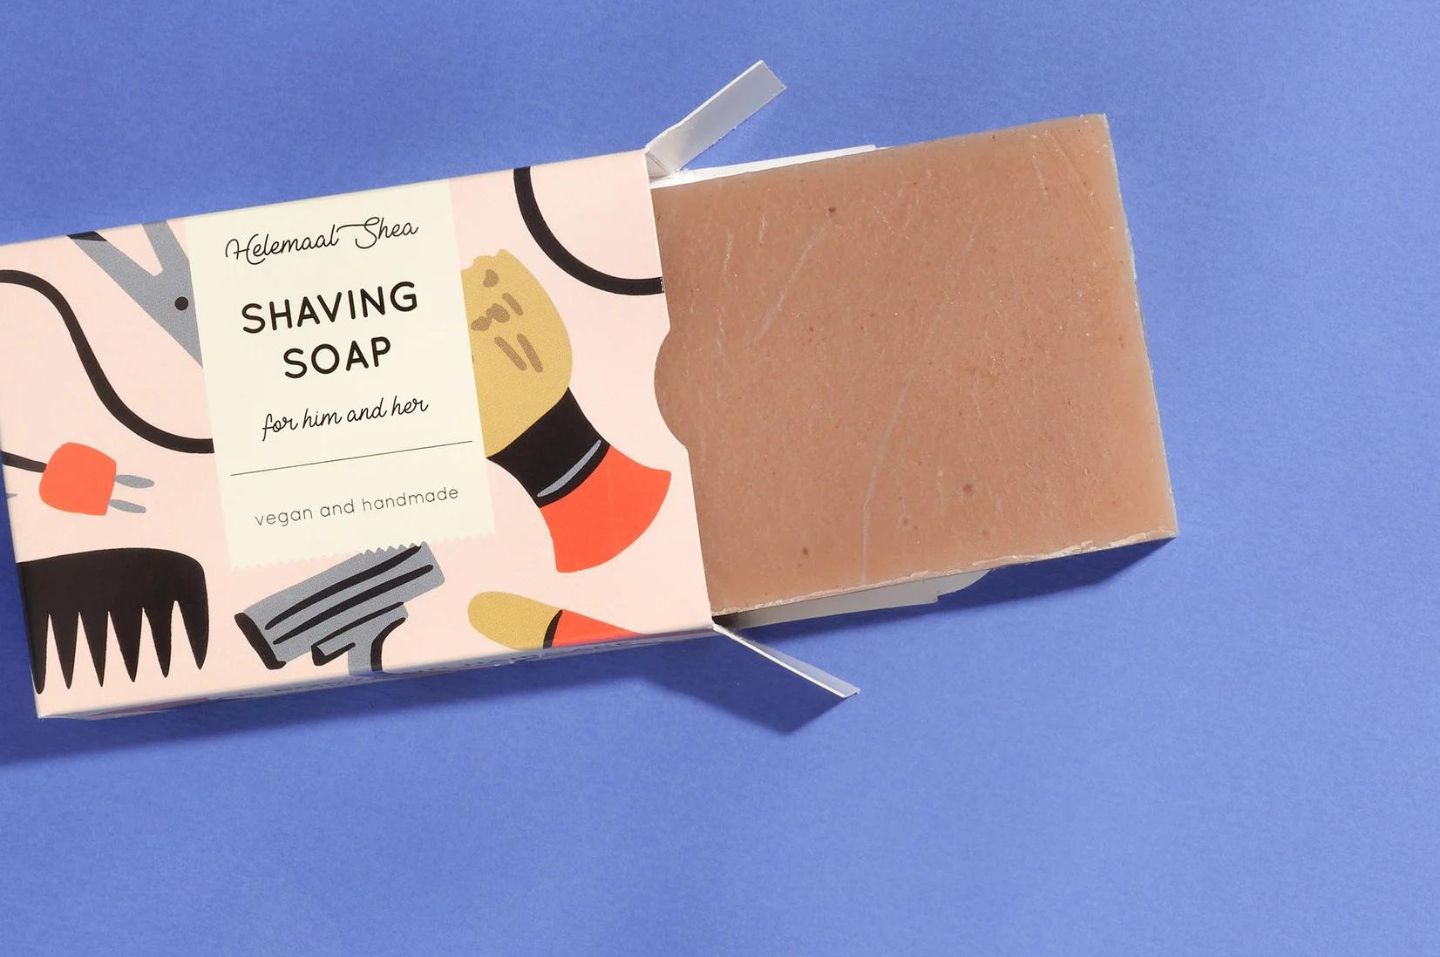 images/homepage/shaving-soap-helemaal-shea.jpg